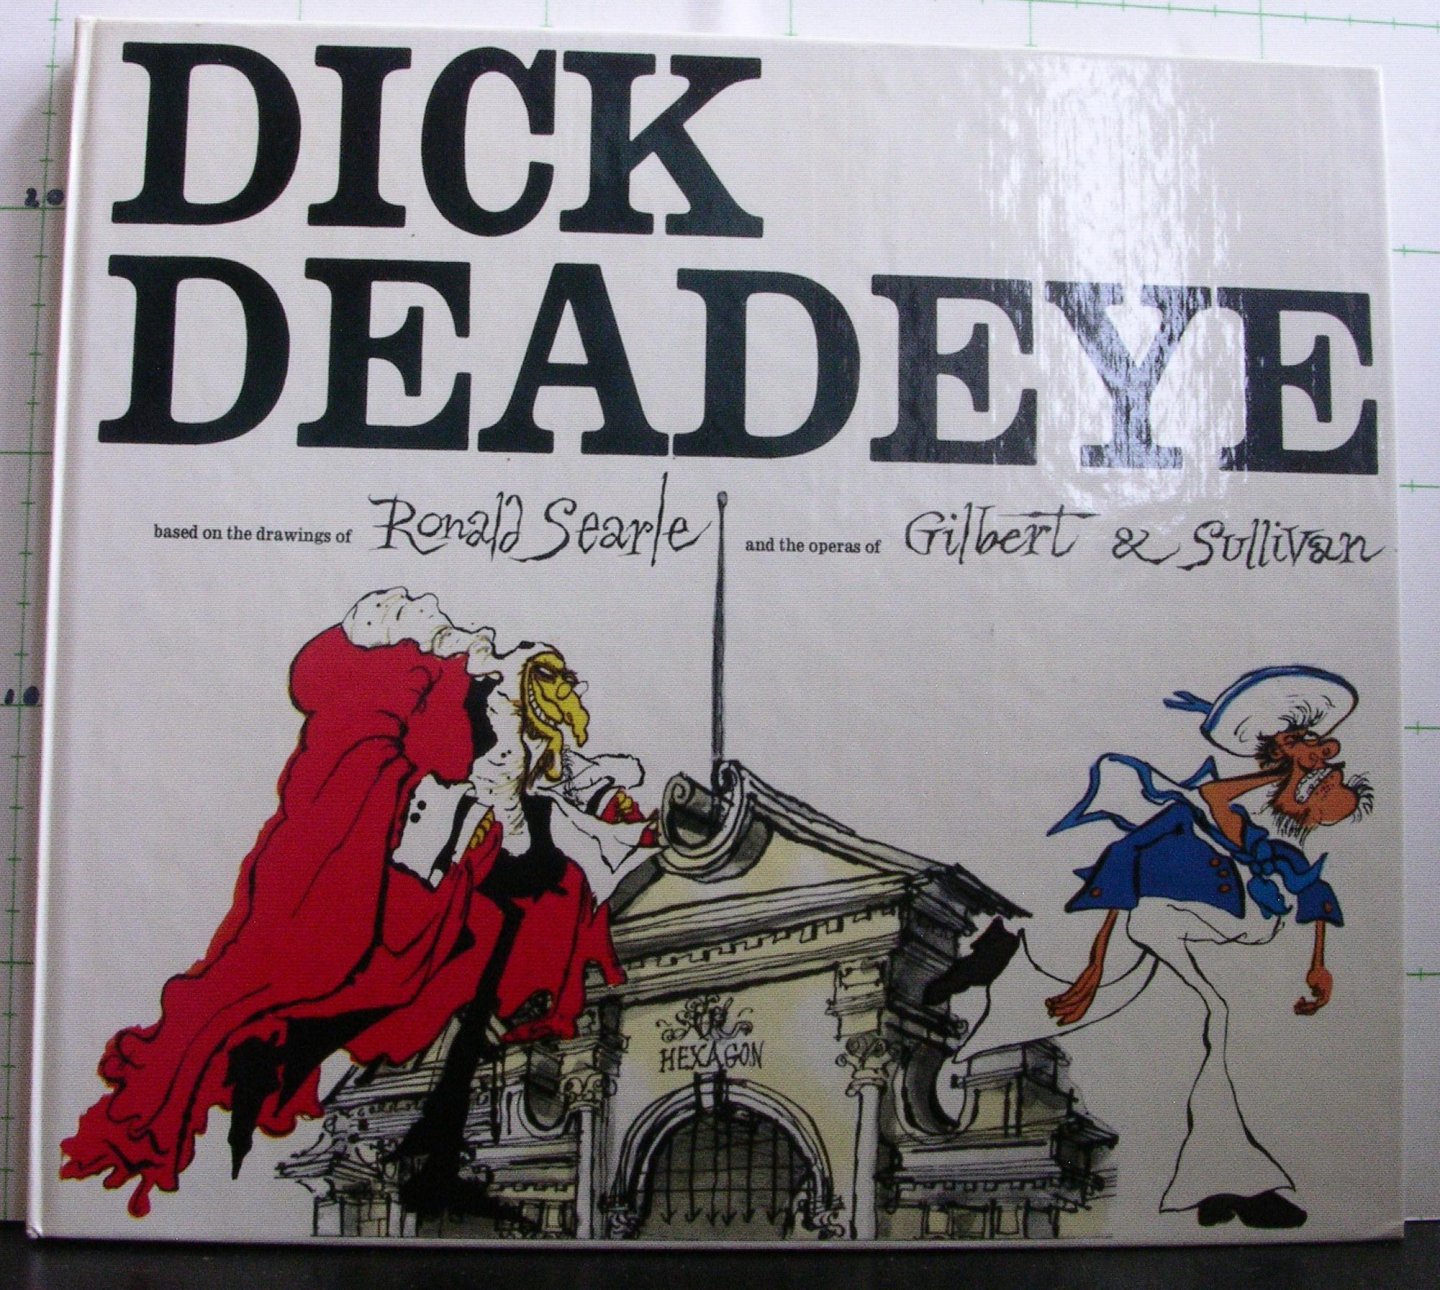 Searle, Ronald - Gilbert & Sullivan - Dick Deadeye